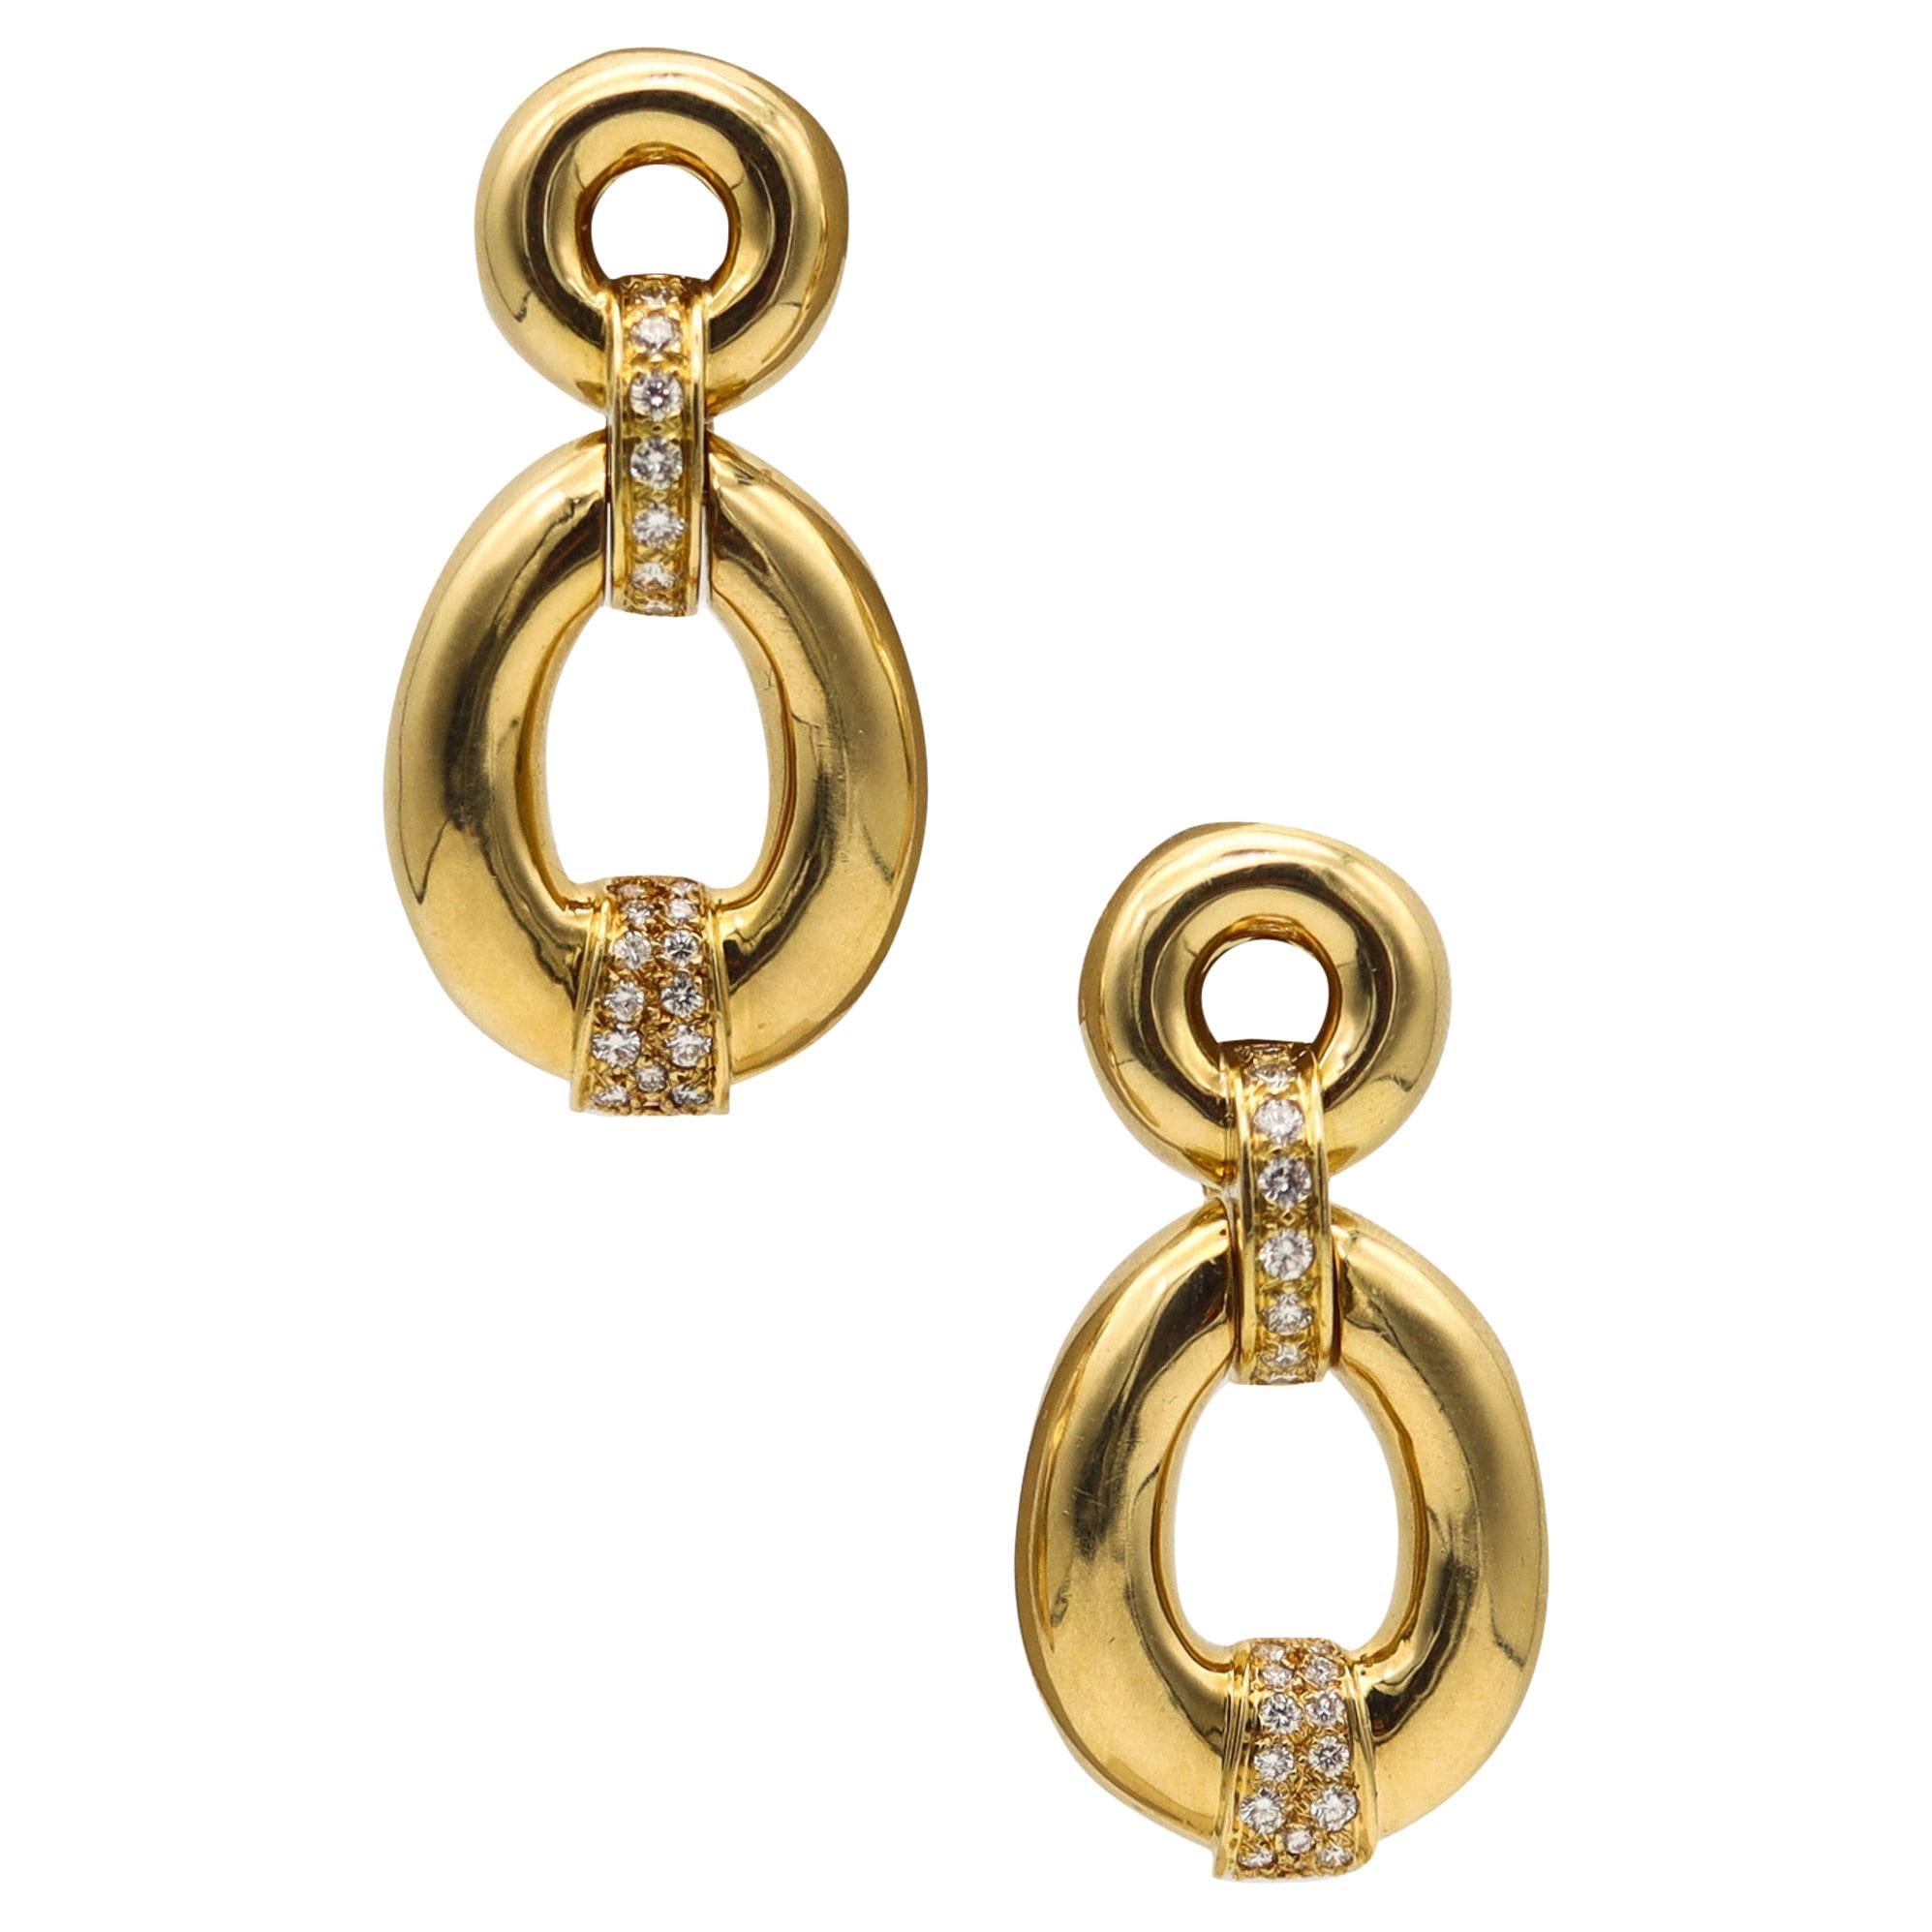 Fred Paris Door Knockers Earrings In 18Kt Yellow Gold With 2.40 Ctw VS Diamonds